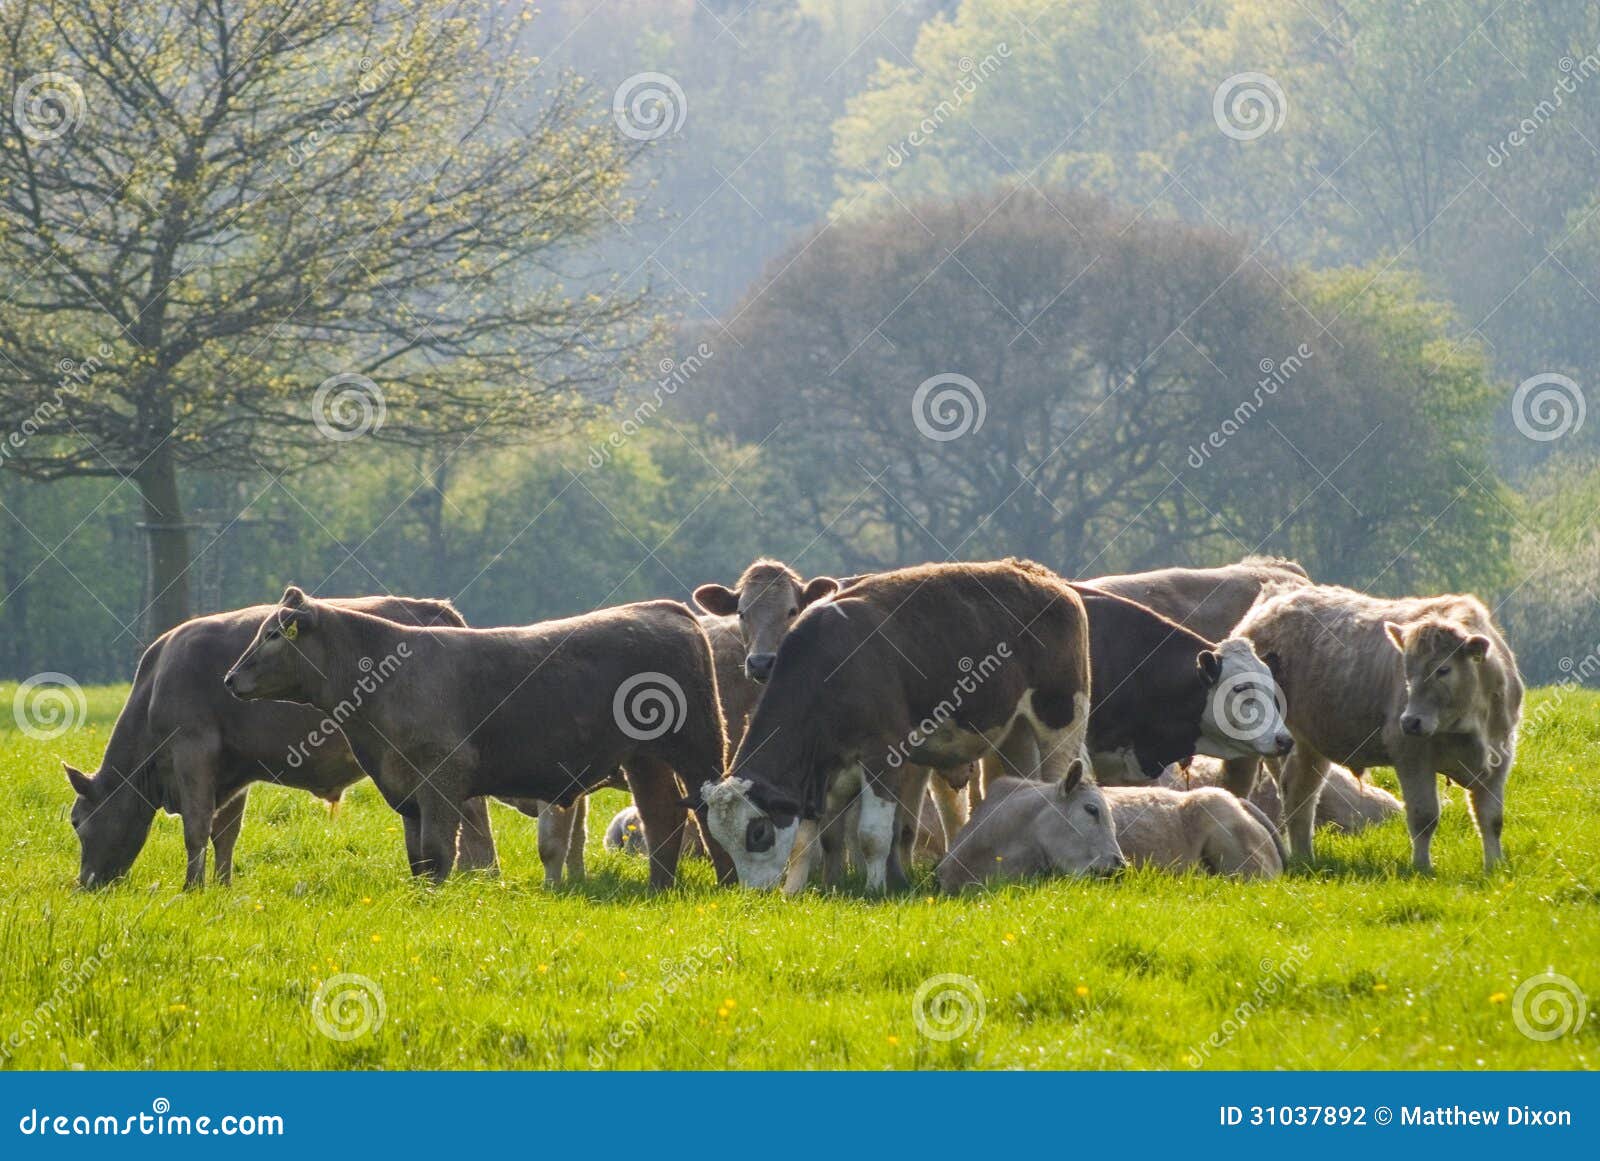 healthy cattle livestock, idyllic rural, uk